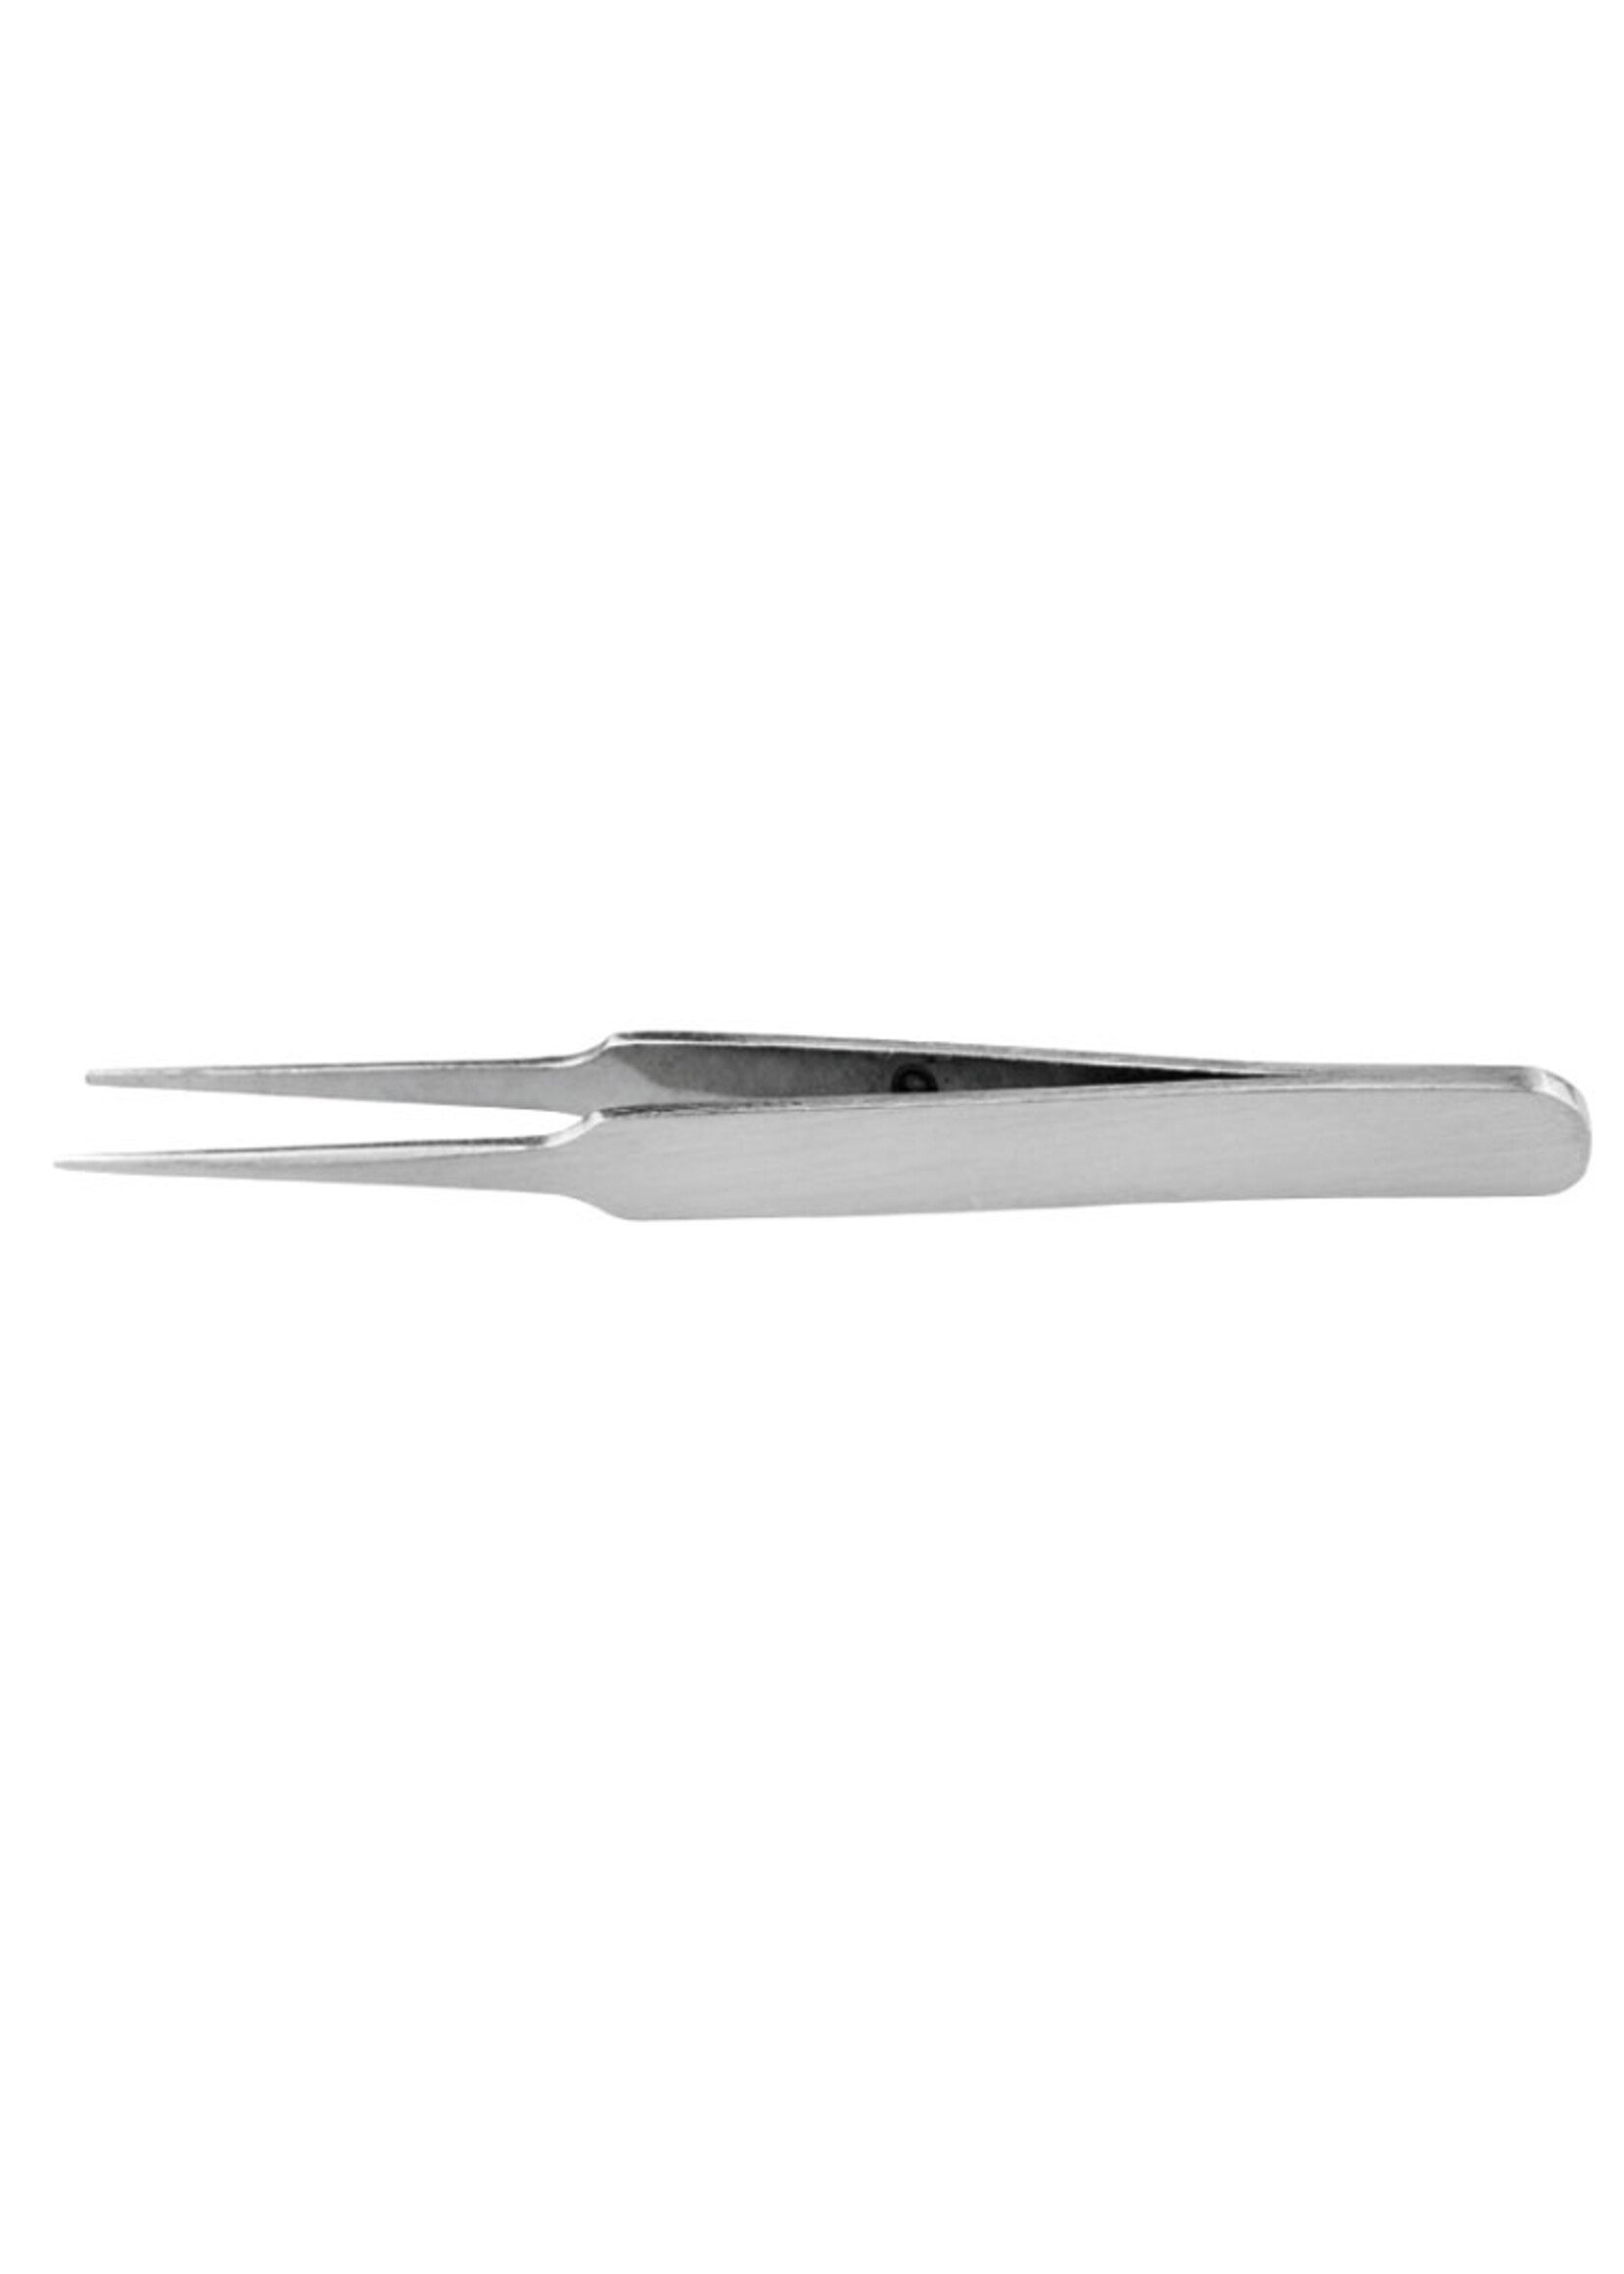 Mini Tweezer straight 8cm - narrow tips